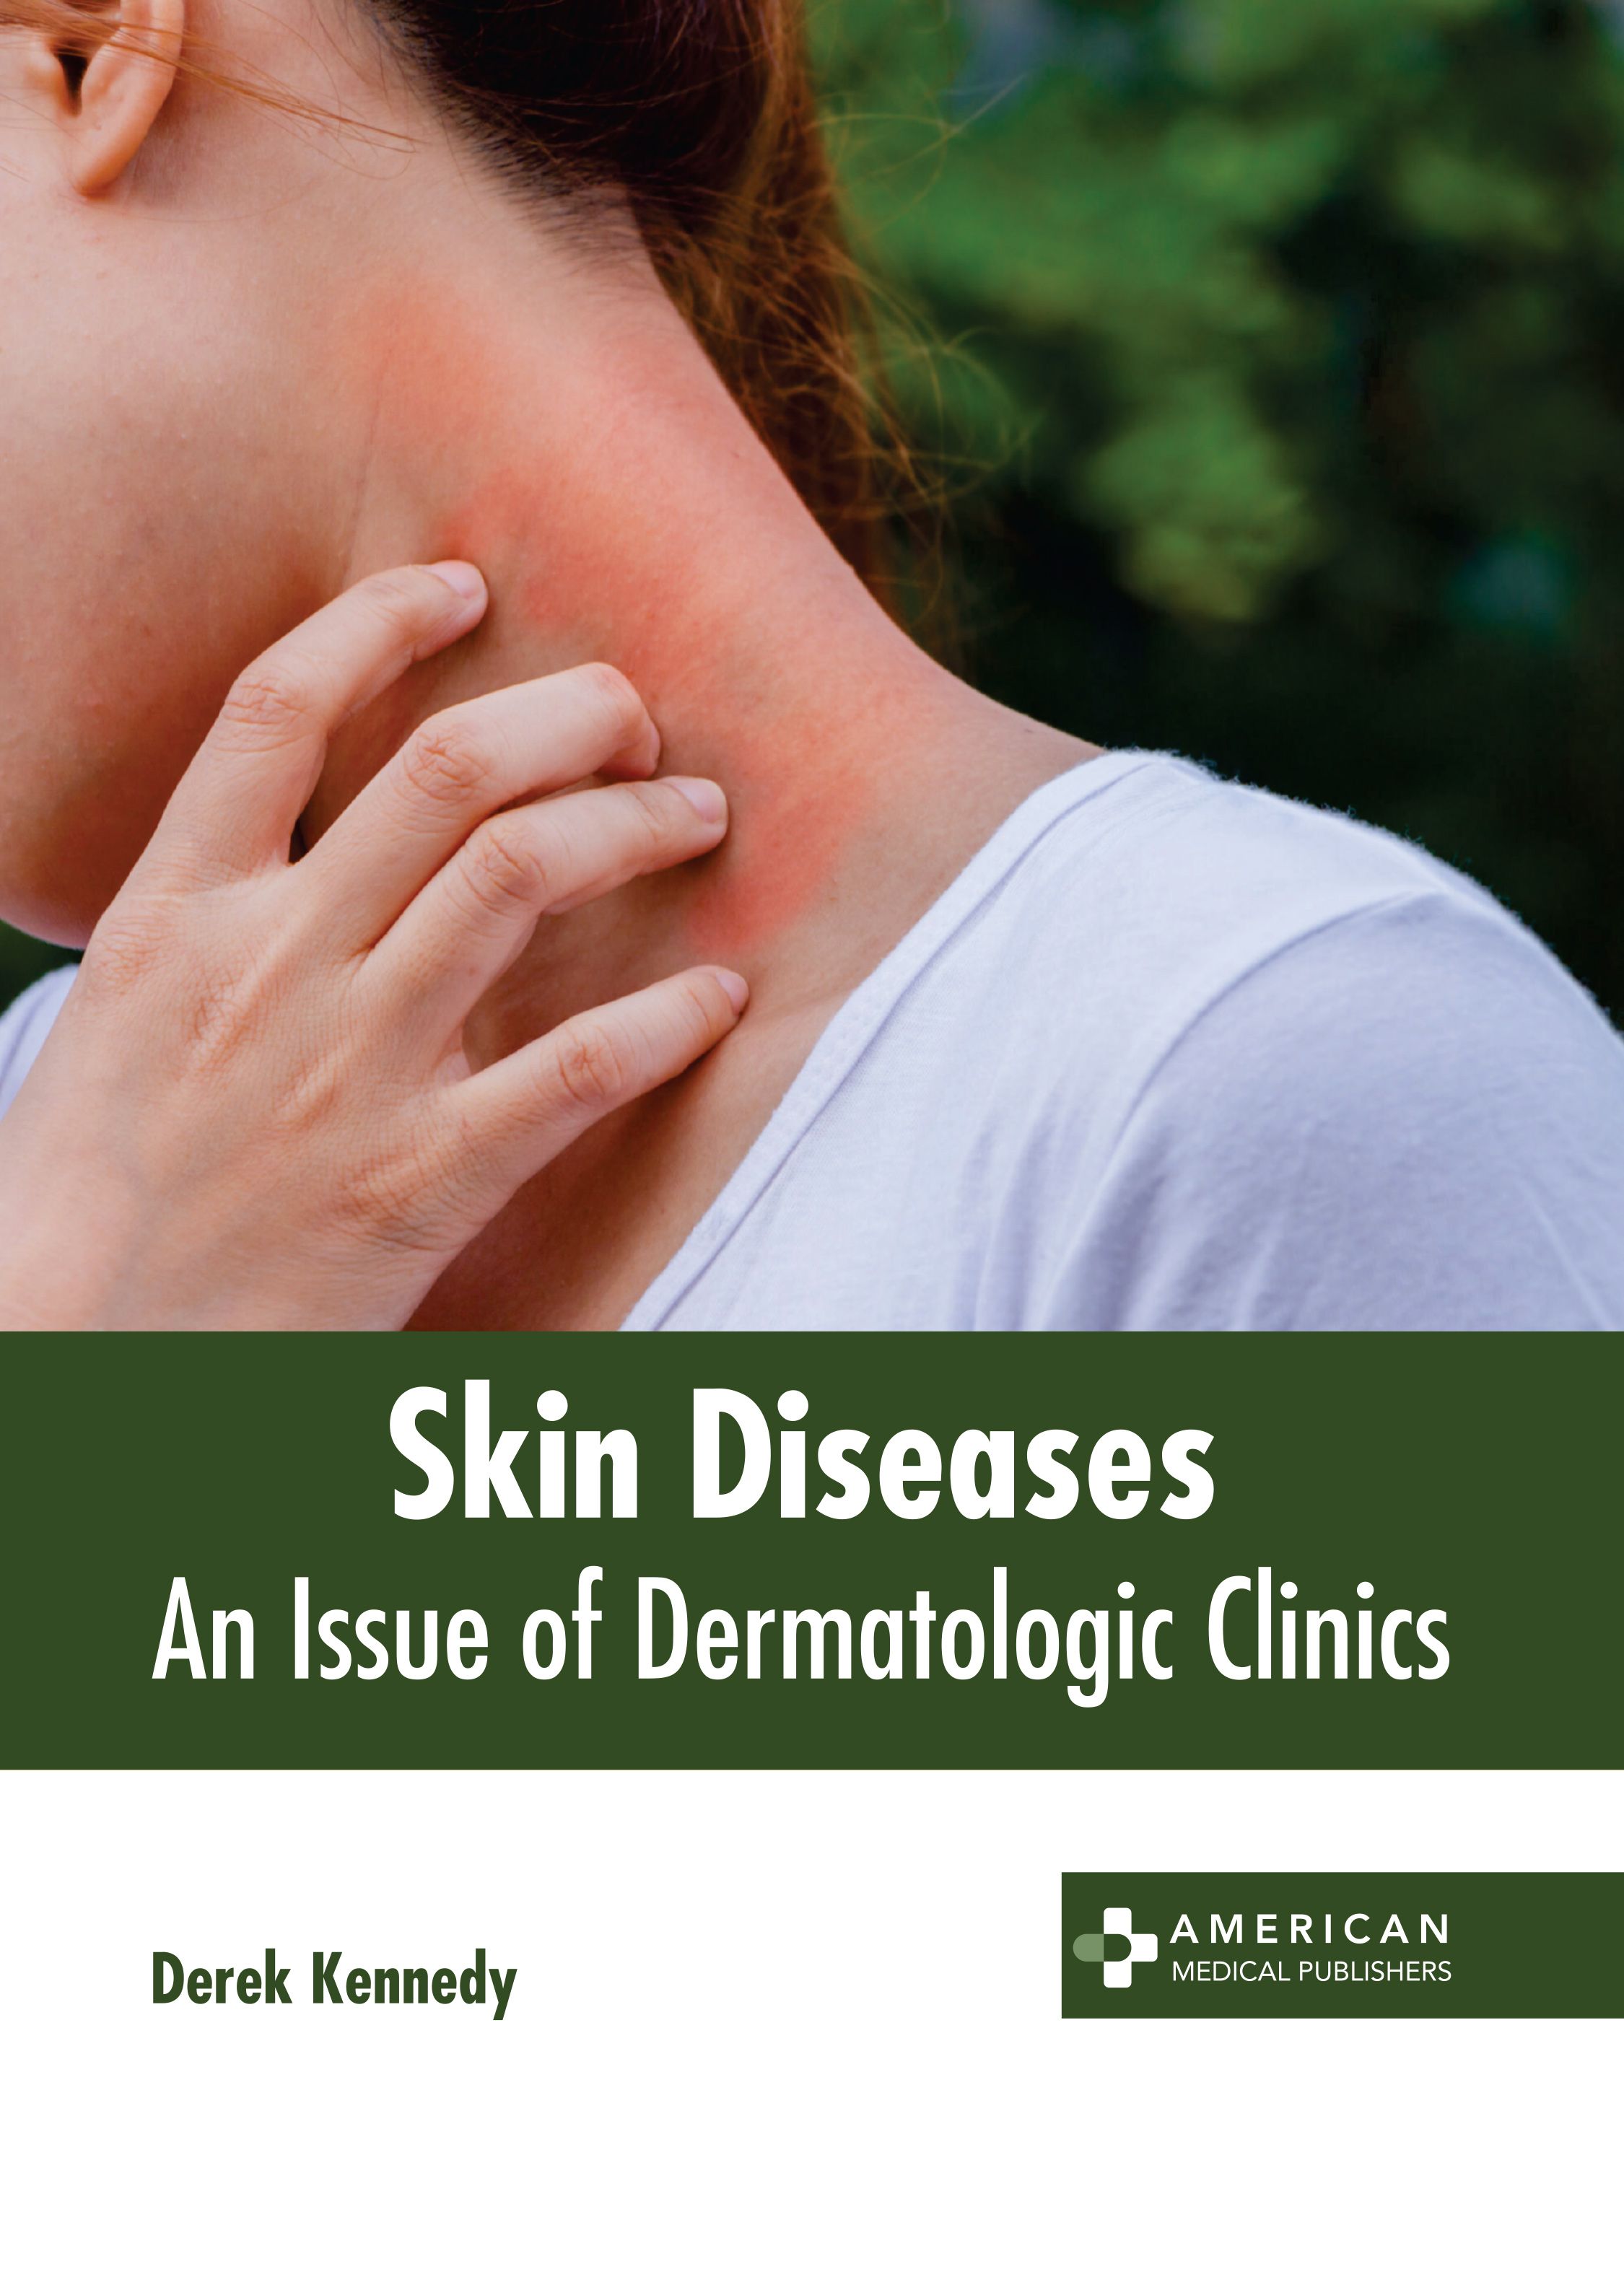 SKIN DISEASES: AN ISSUE OF DERMATOLOGIC CLINICS